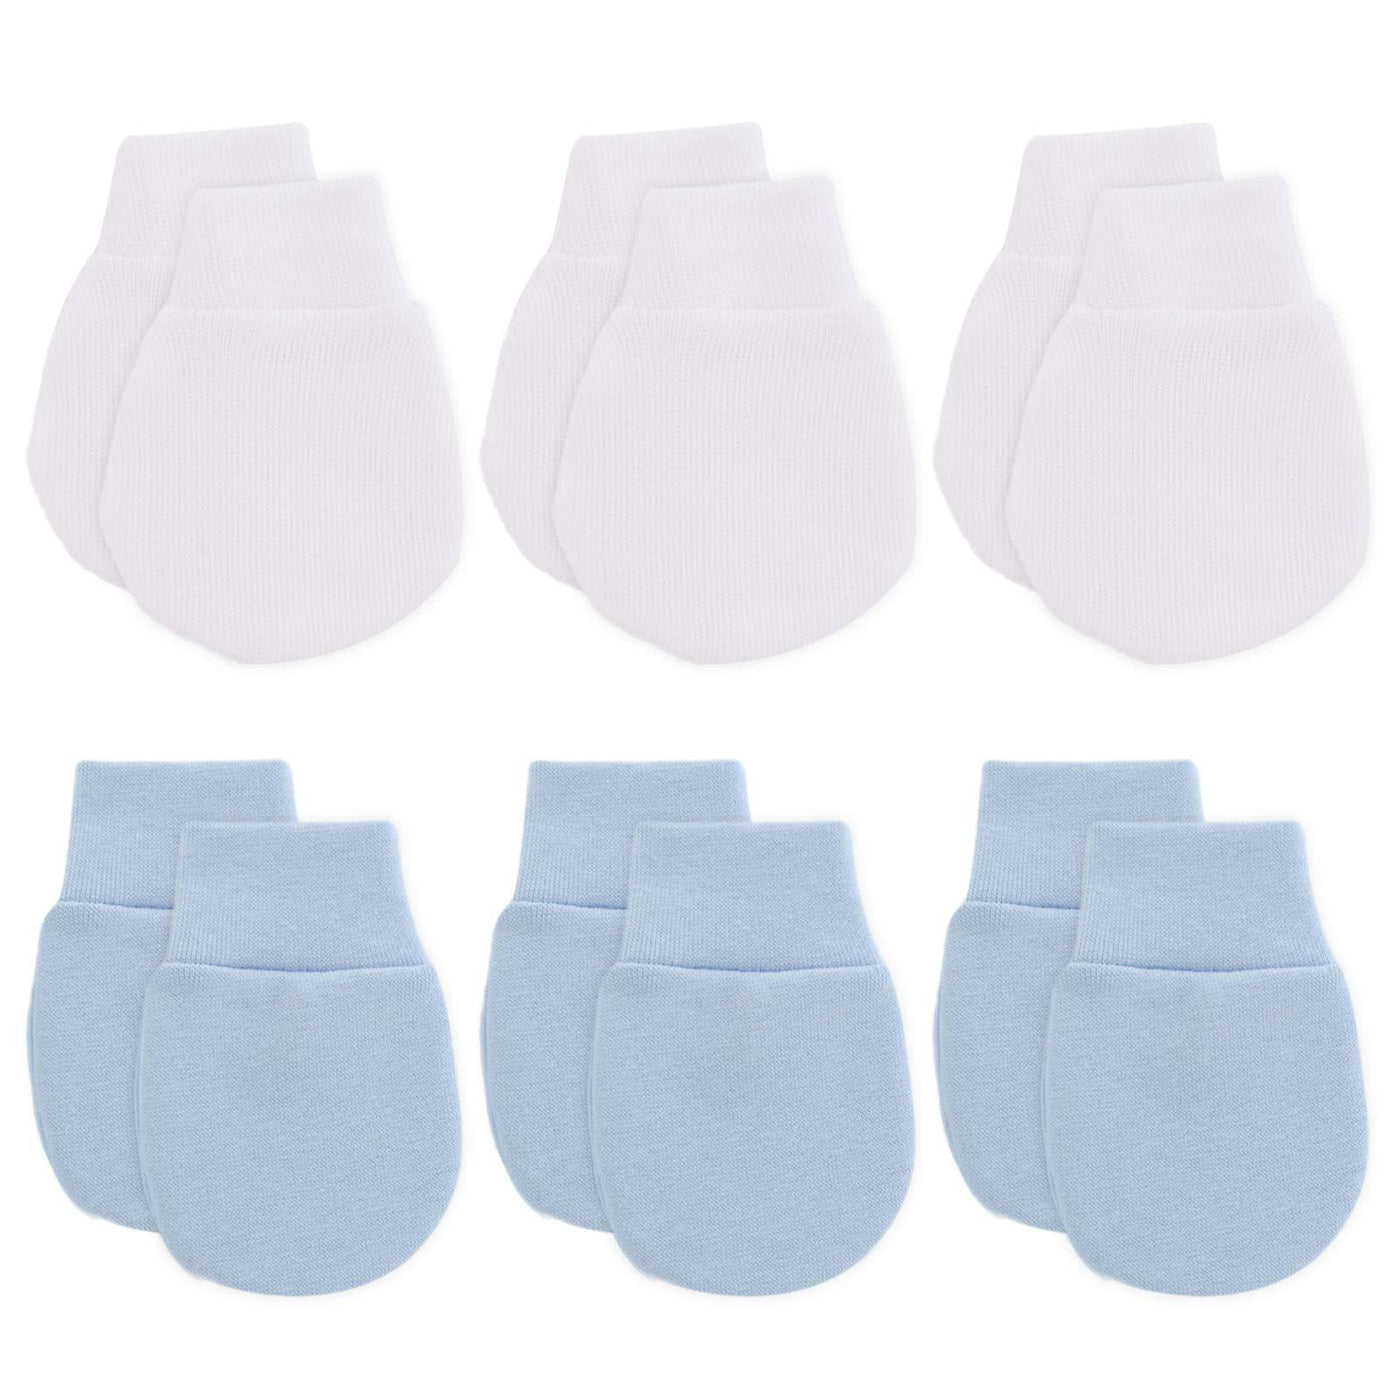 6 Pairs Newborn Baby Cotton Gloves No Scratch Mittens for 0-6